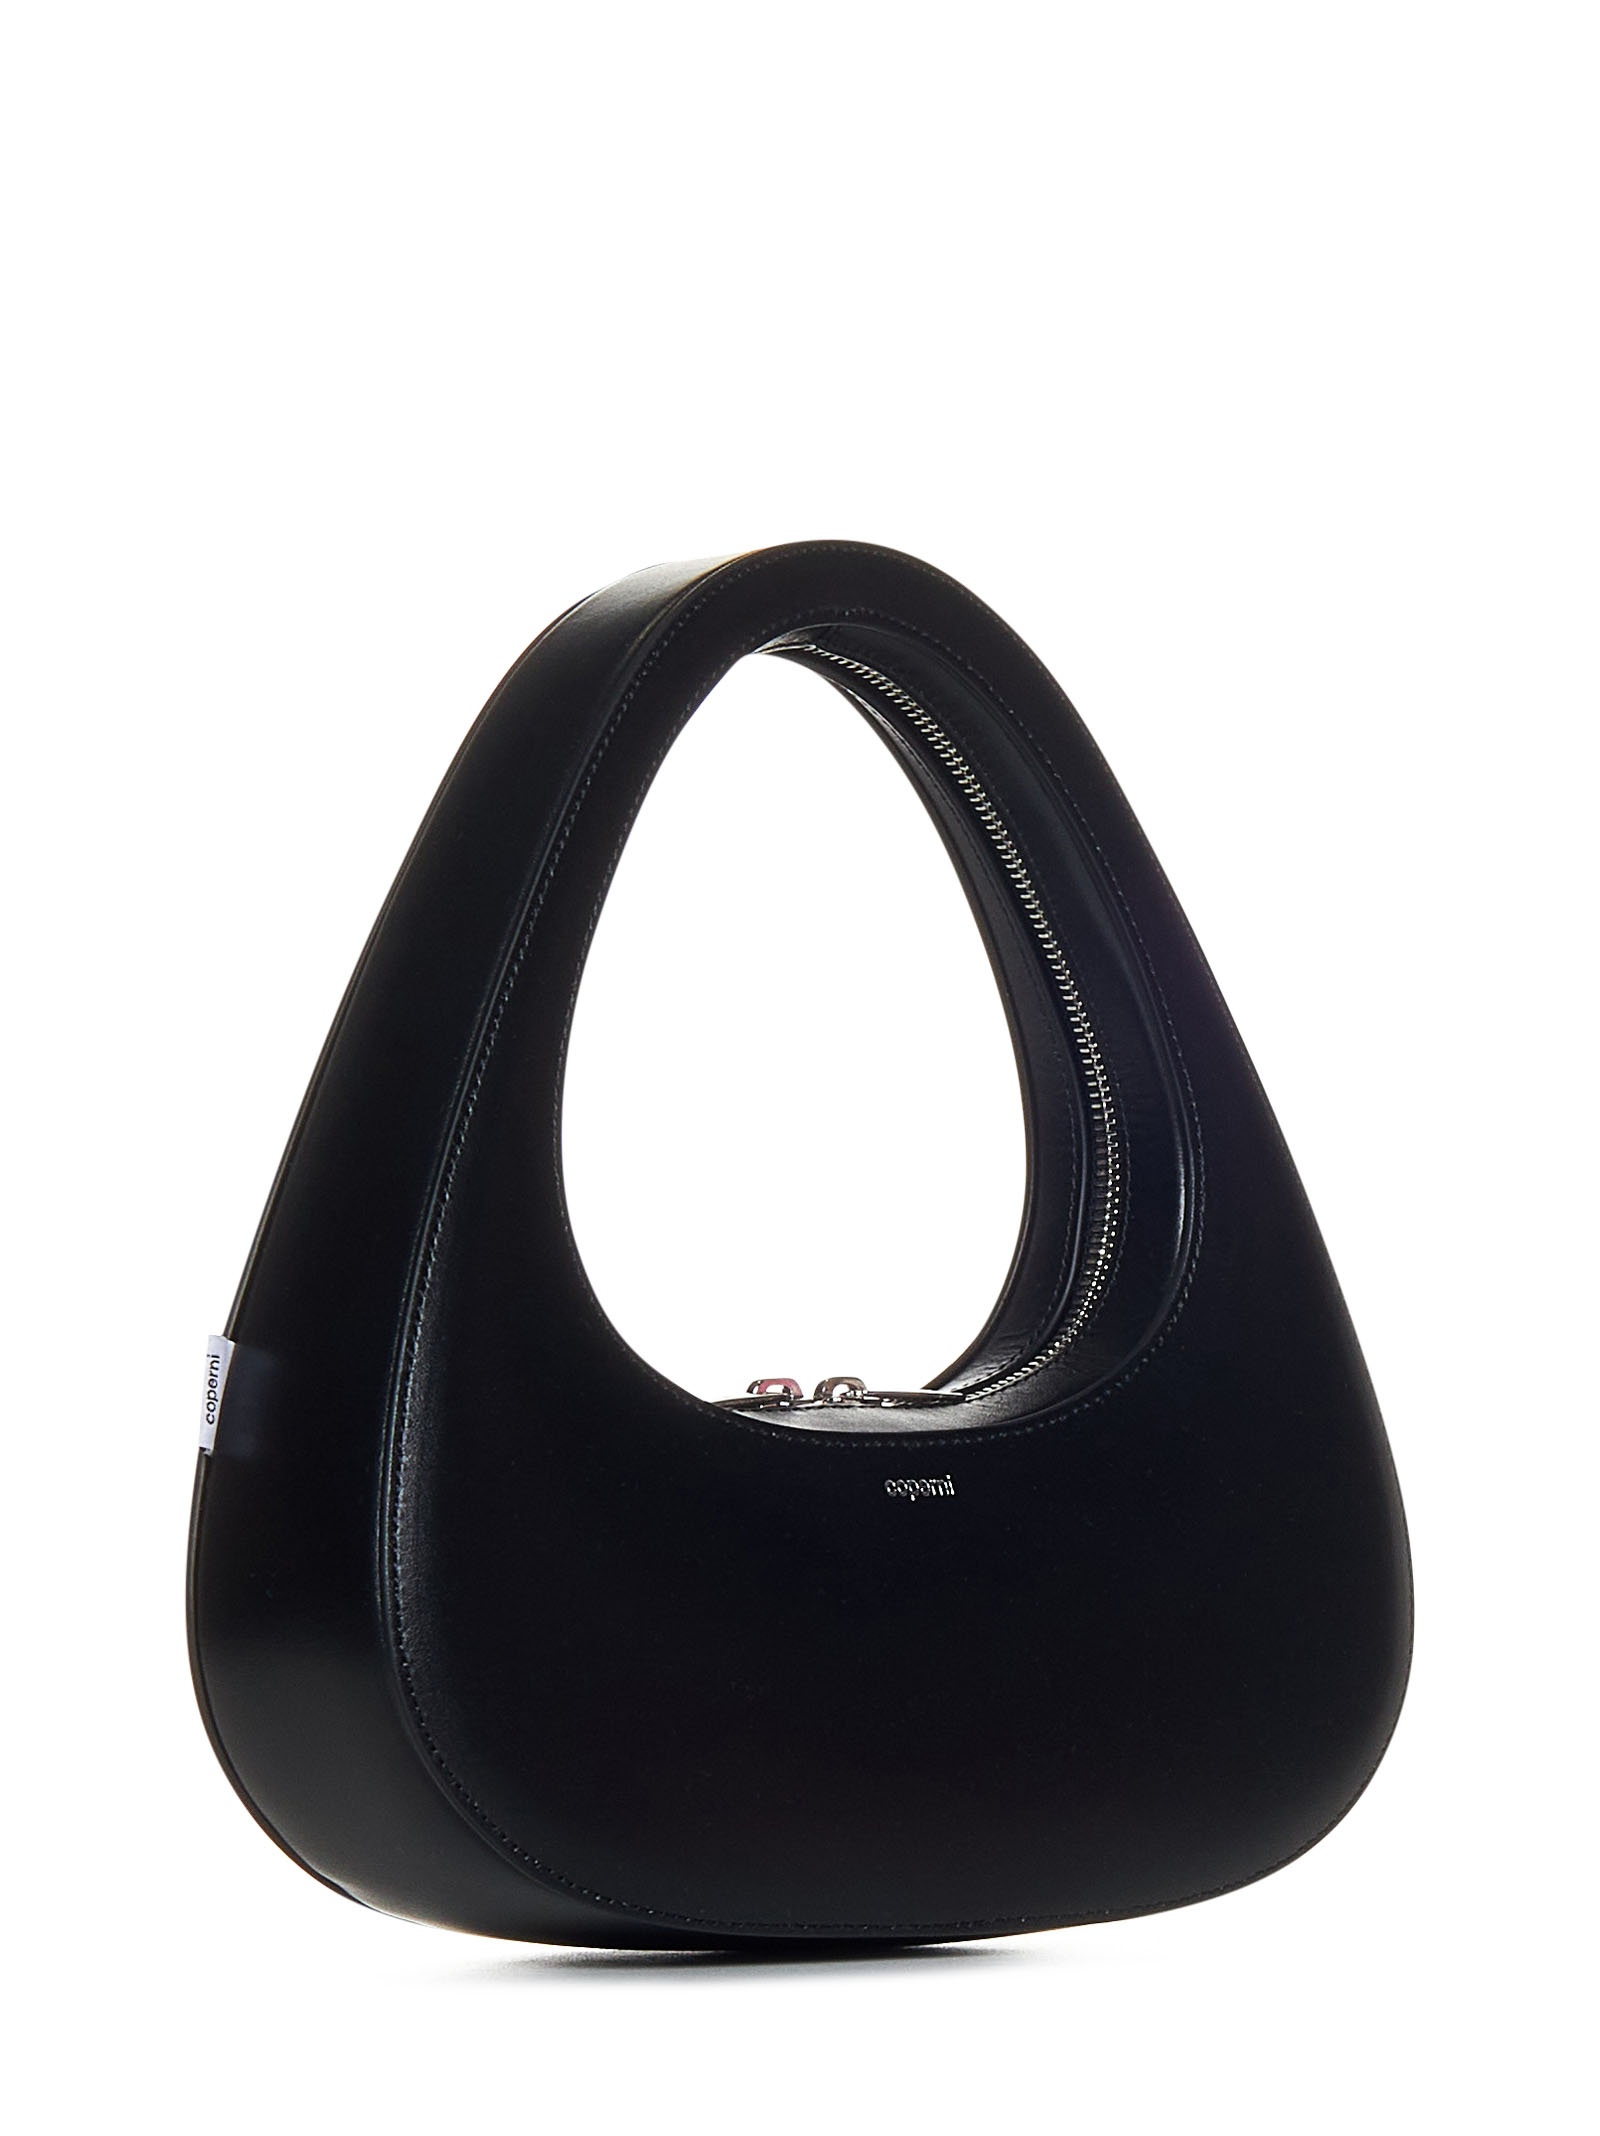 Black calfskin curved triangular baguette bag with silver-foil print logo at front. - 2